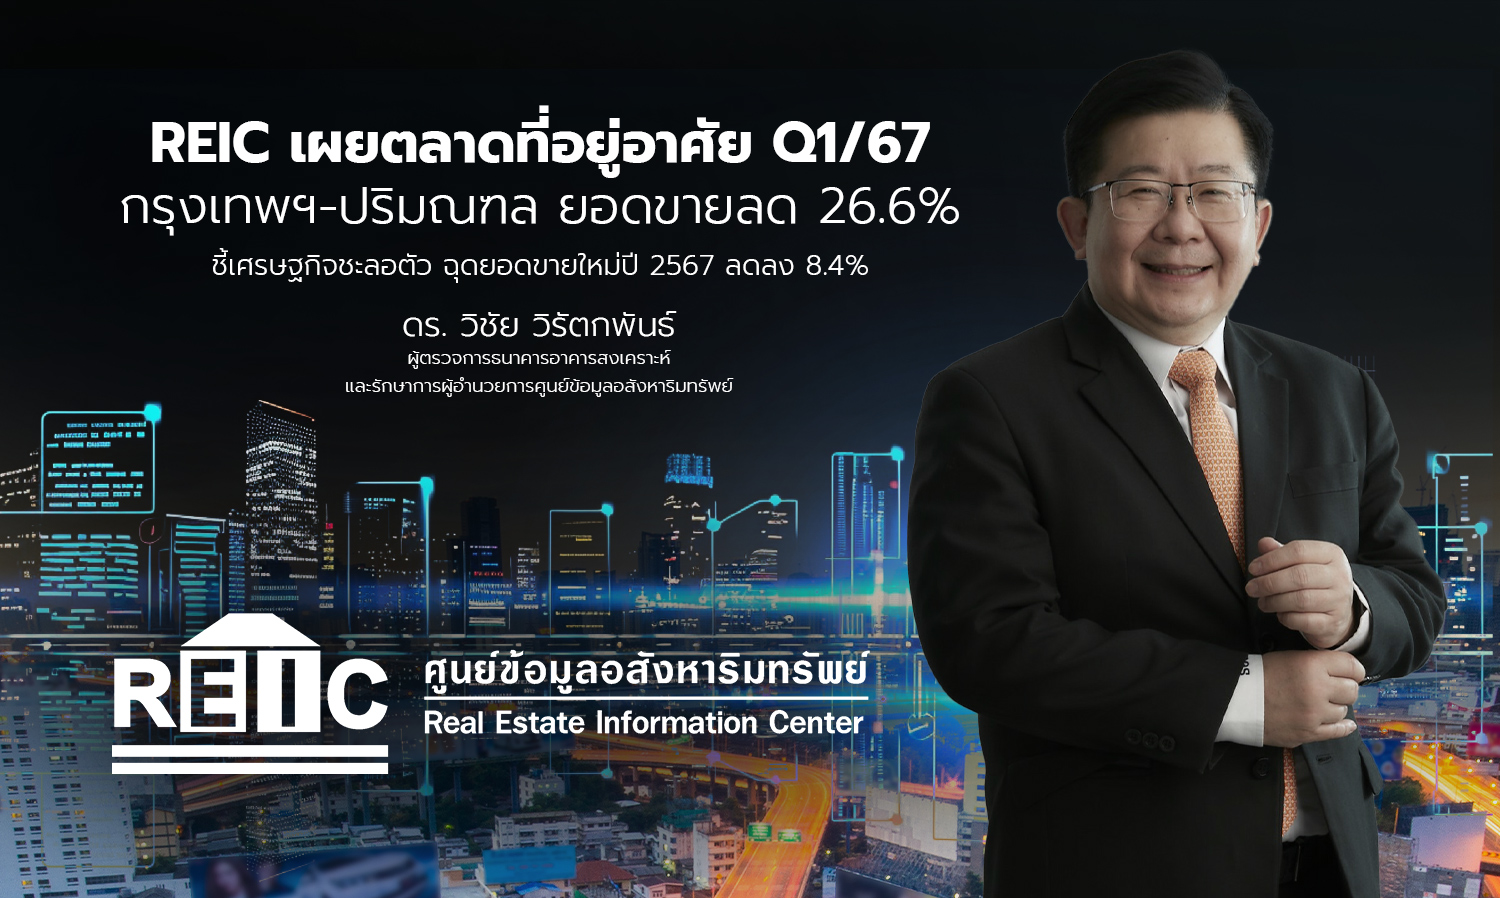 REIC เผยตลาดที่อยู่อาศัยQ1/67 กรุงเทพฯ-ปริมณฑล ยอดขายลด 26.6% ชี้เศรษฐกิจชะลอตัว ฉุดยอดขายใหม่ปี 2567 ลดลง 8.4%